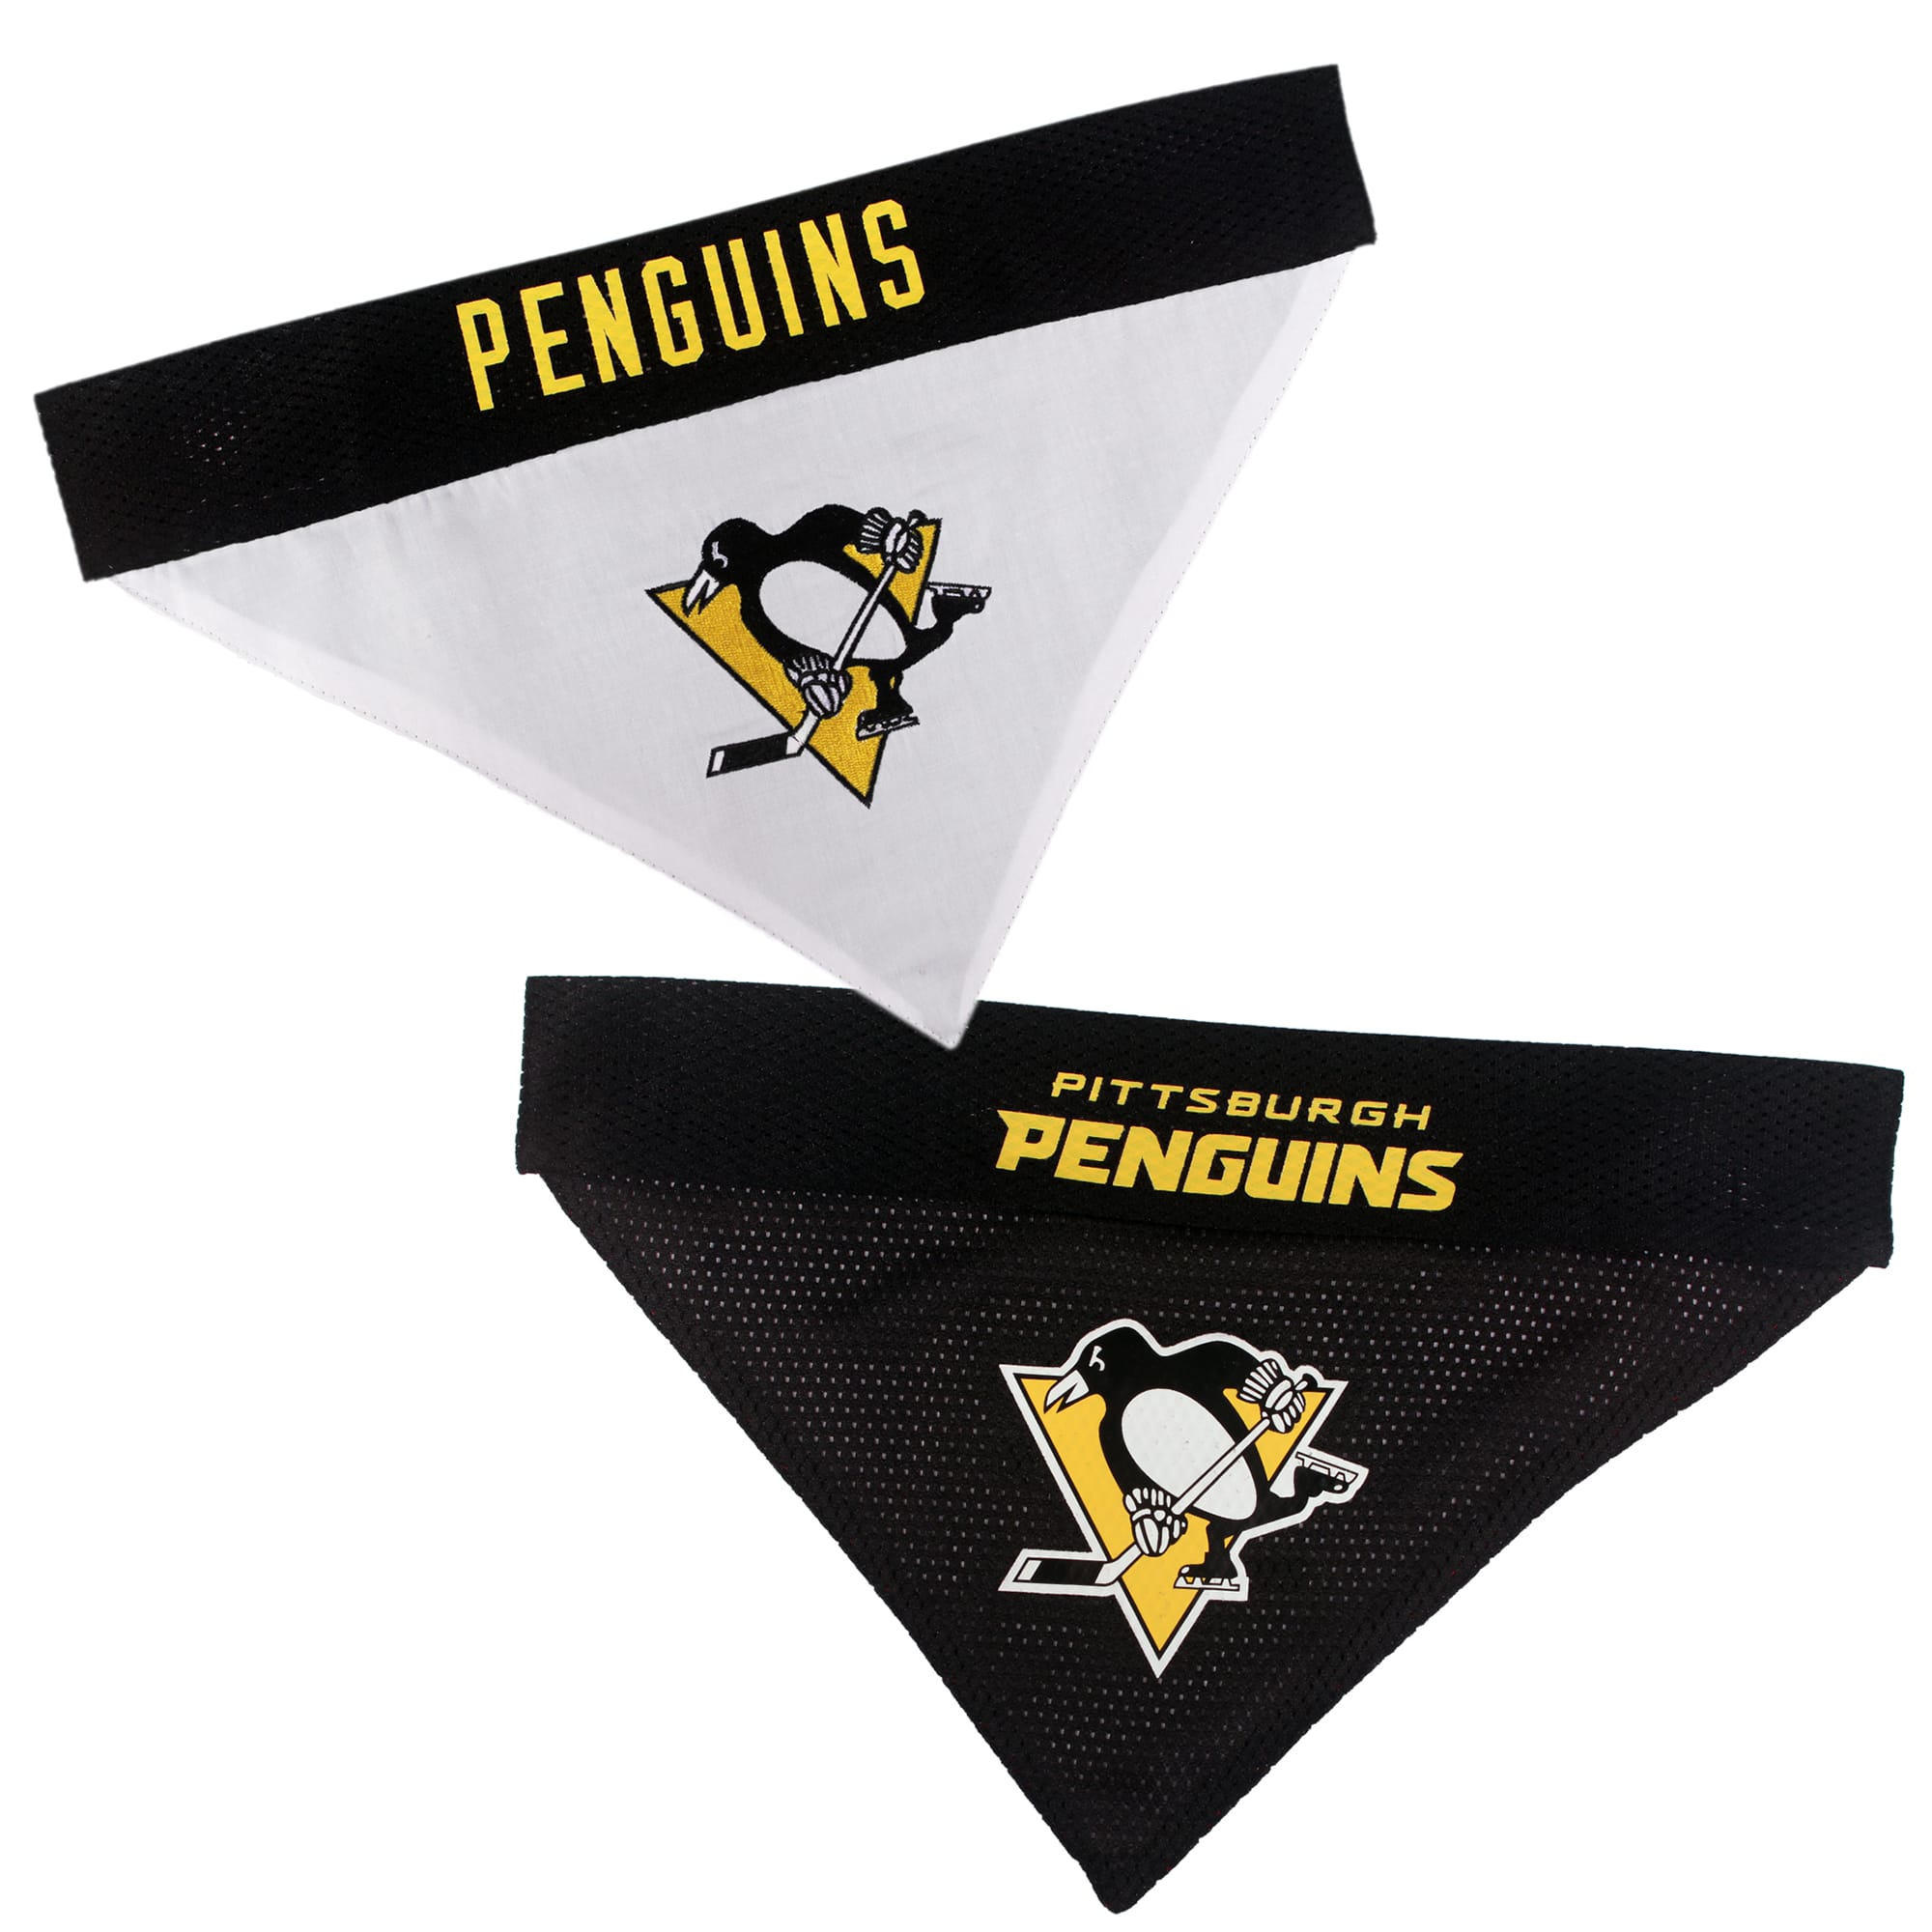 Pittsburgh Penguins Pet Gear, Penguins Collars, Chew Toys, Pet